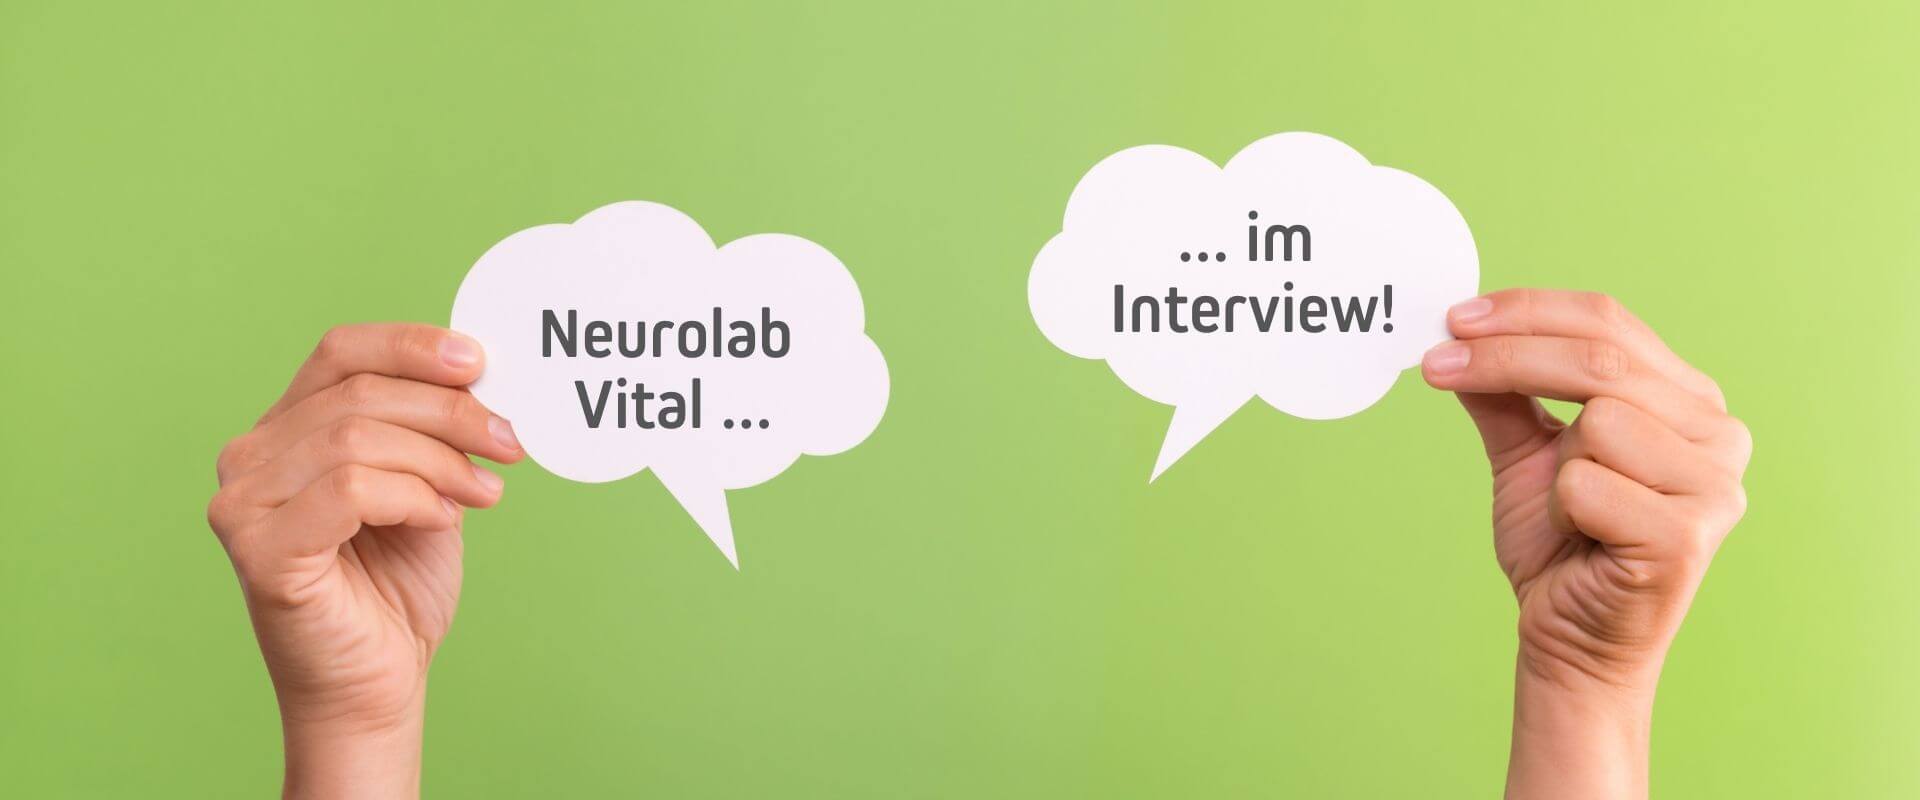 Neurolab Vital im Interview